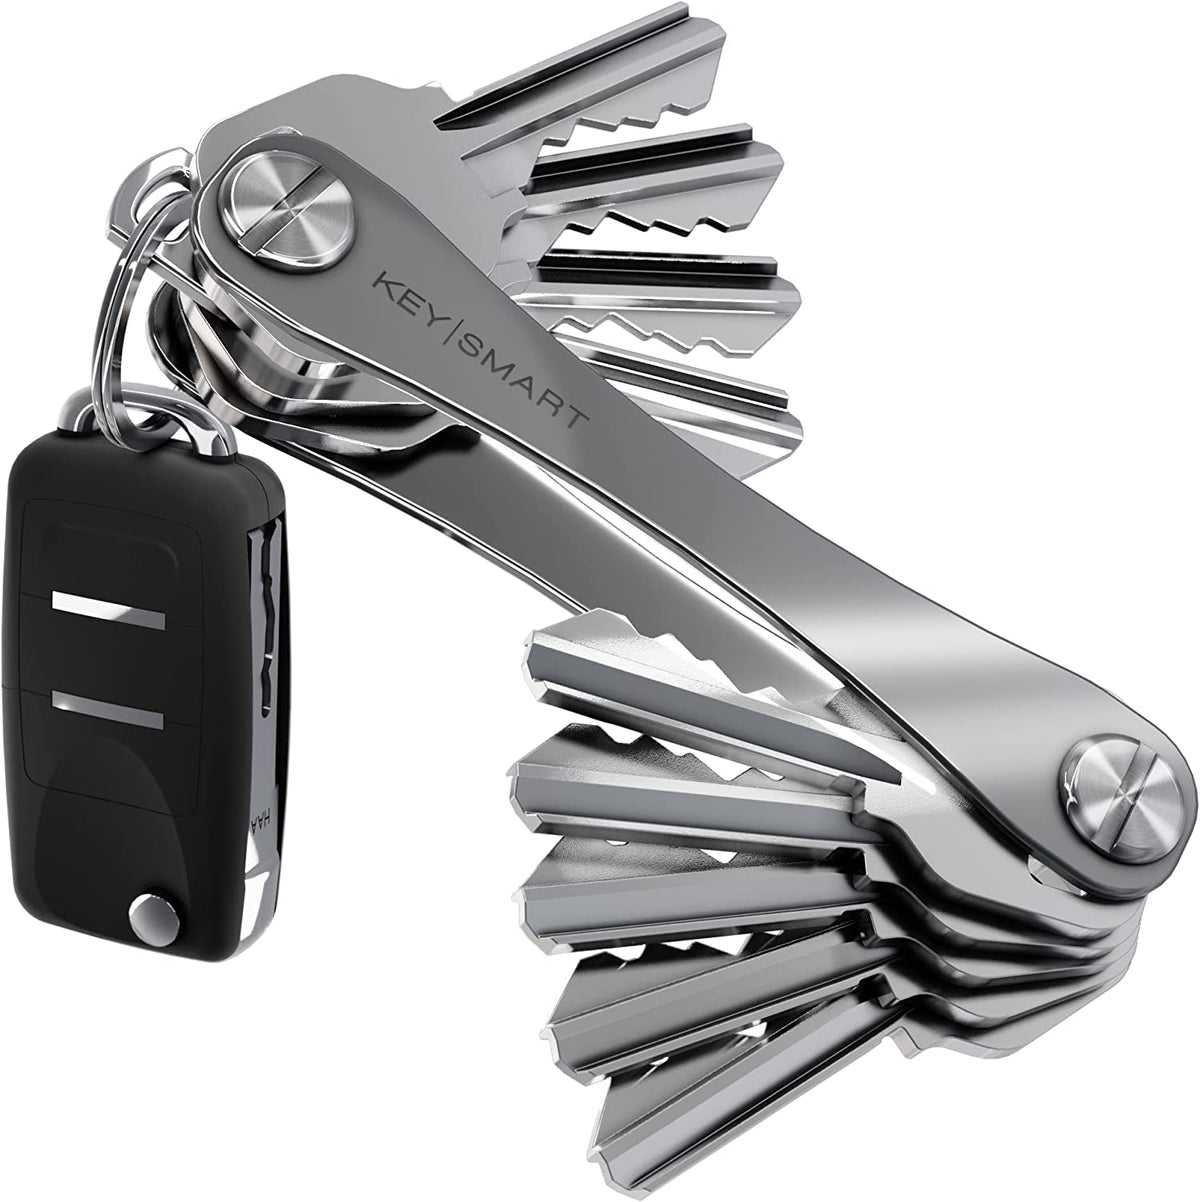 SpyShop Colorful Key Holder, Key Holder, Key Holder, Wall Key Holder, Key  Organizer for Keys, Jewelry and Other Small Items(6 Pack)